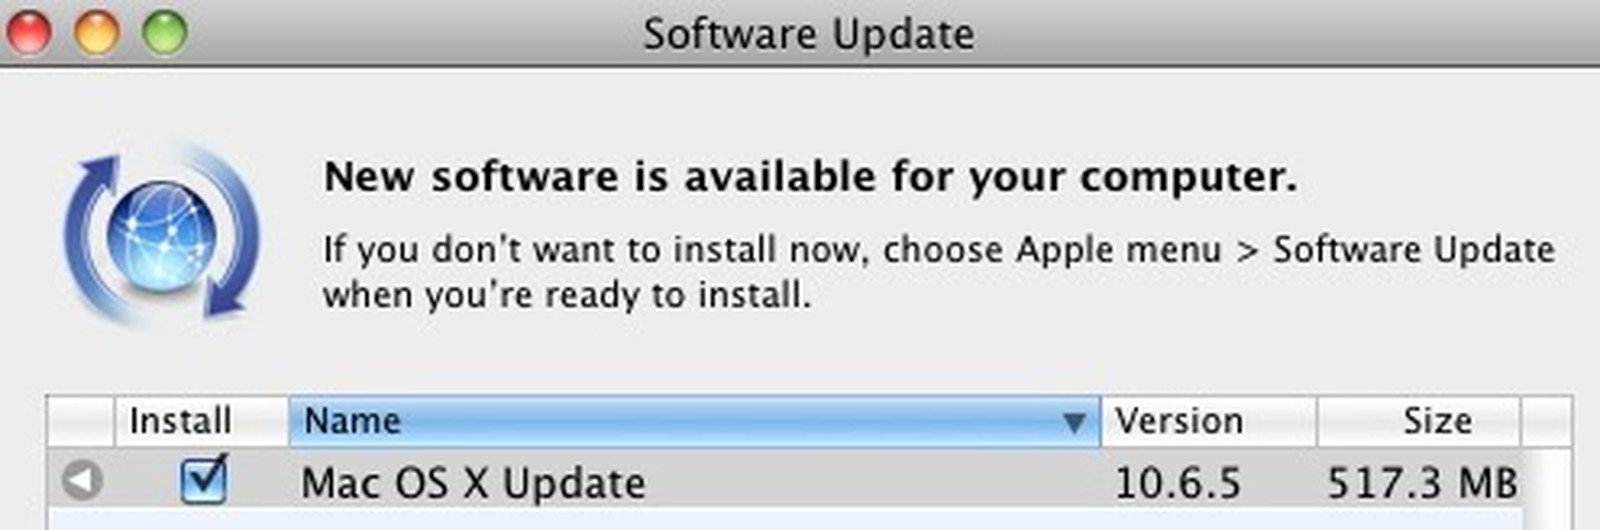 apple security update iphones macs